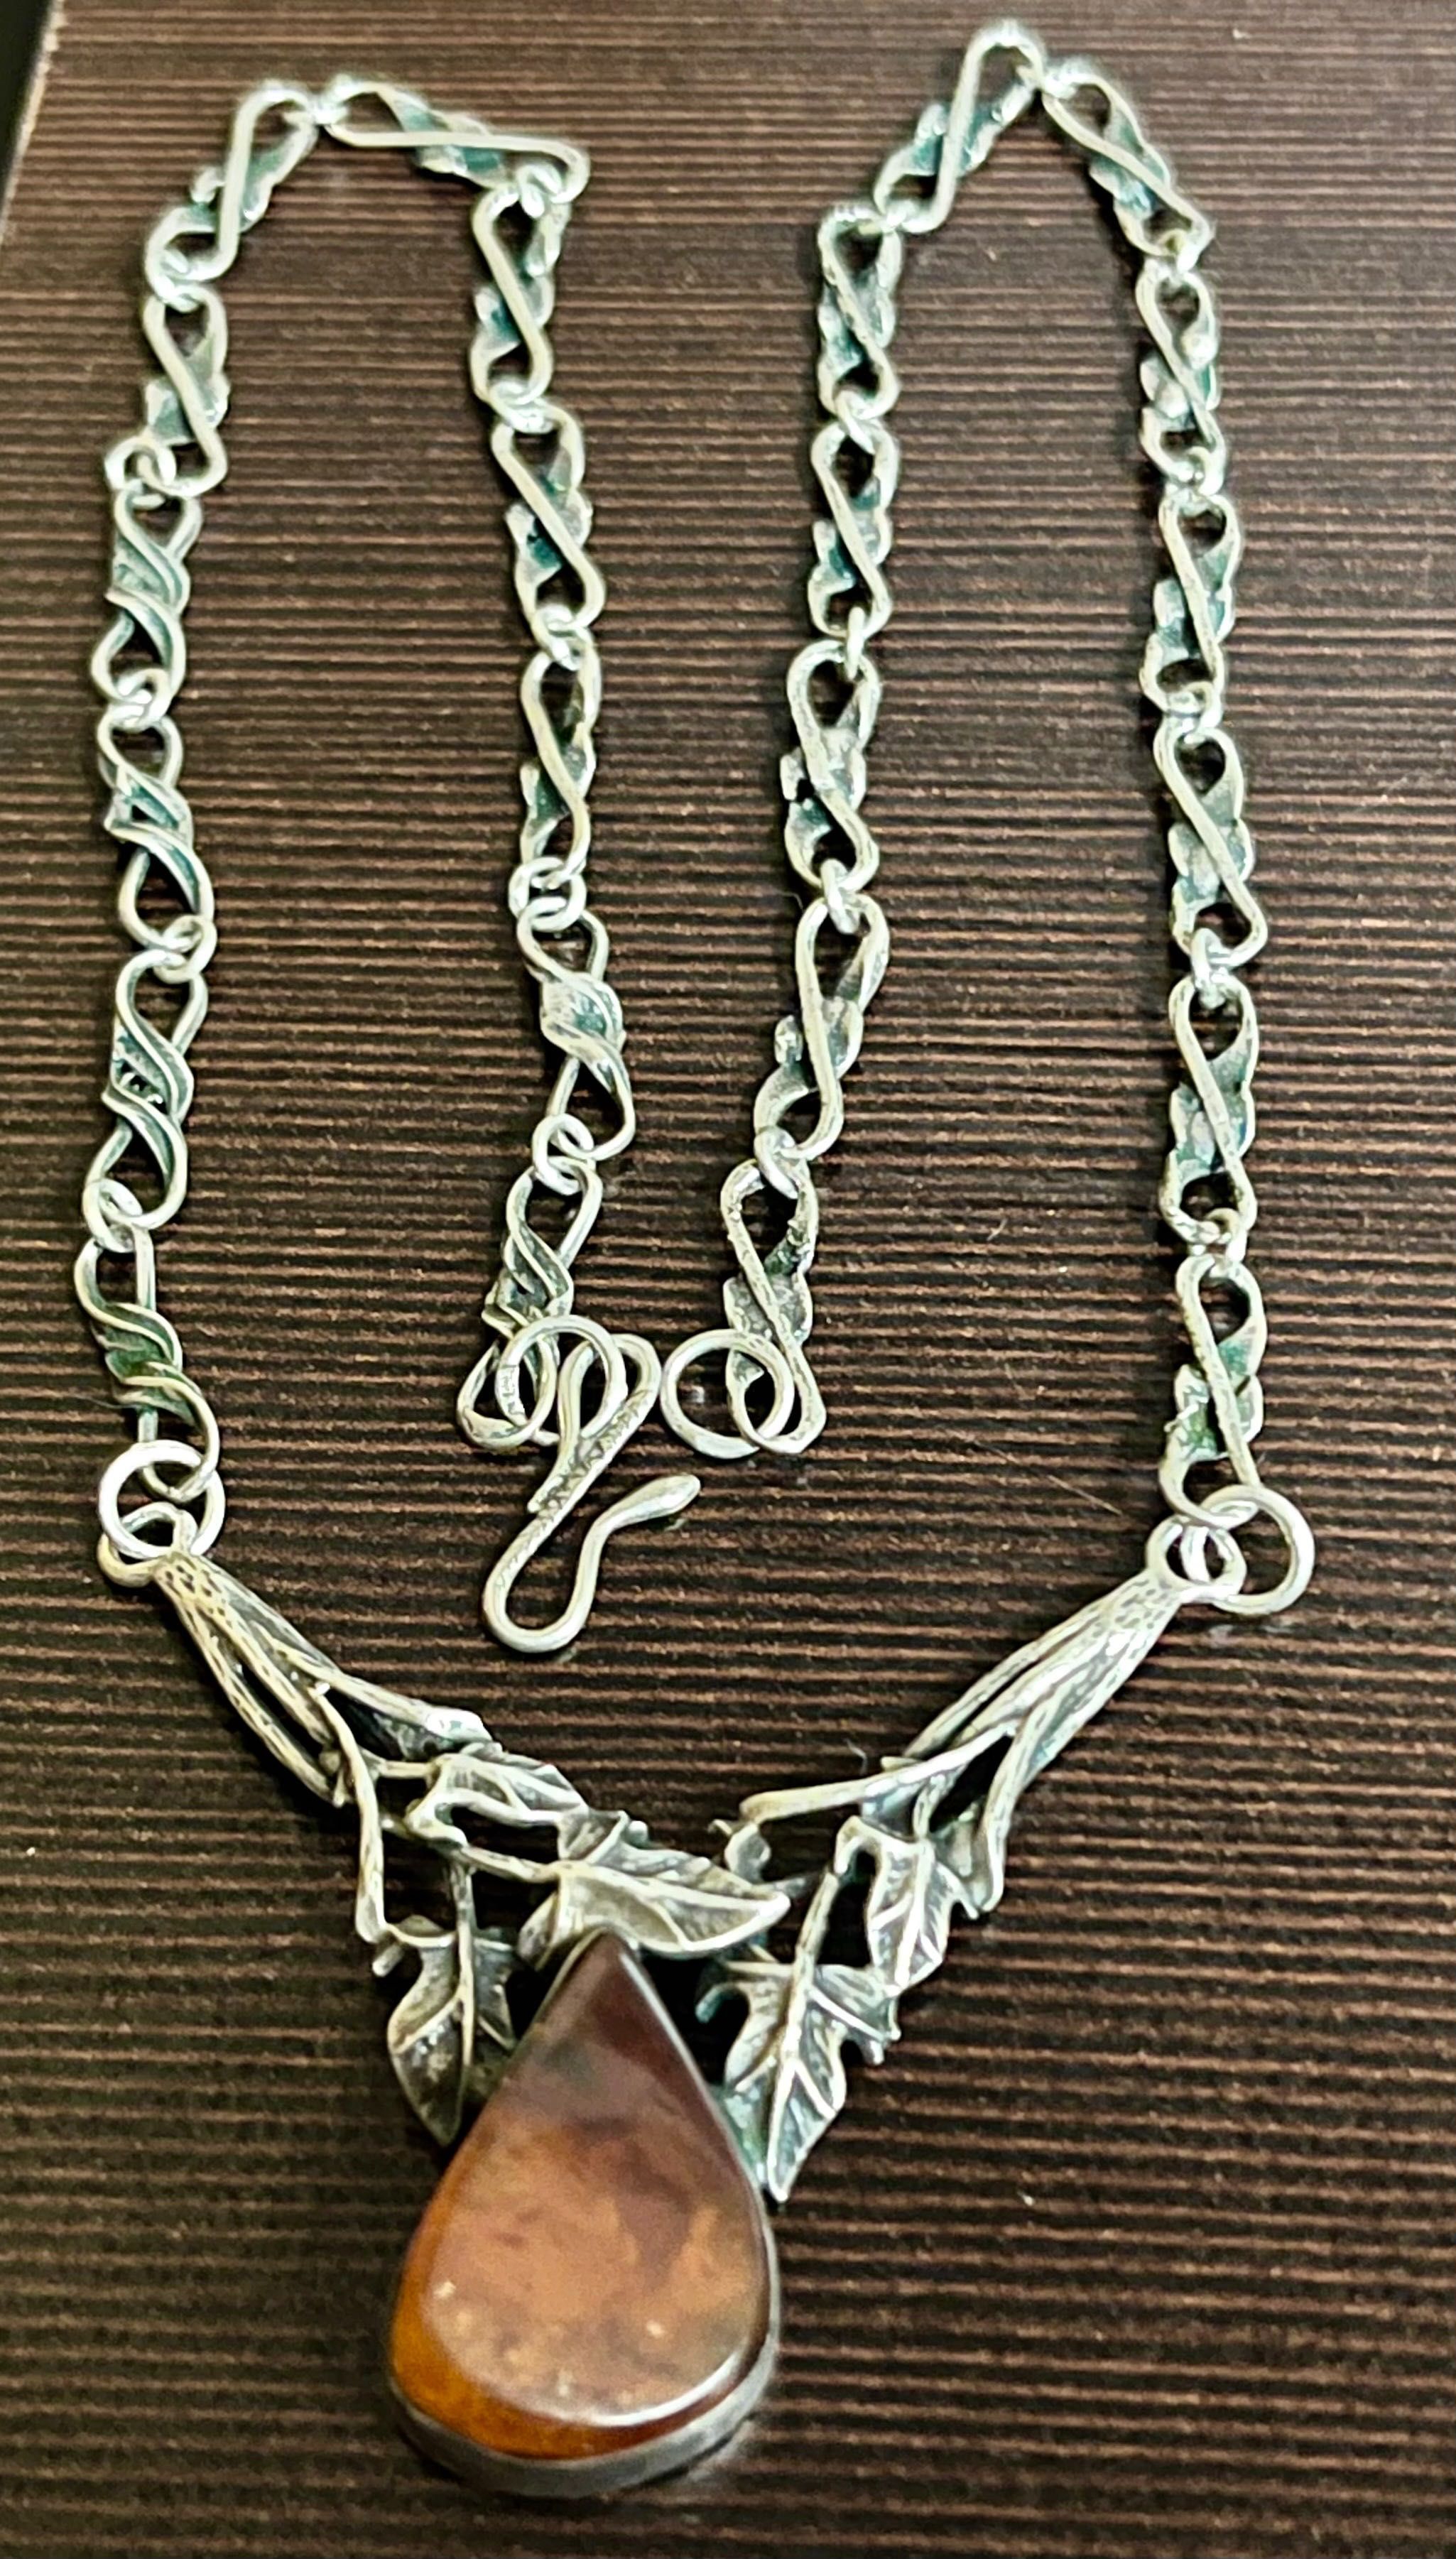 Stare srebro łańcuszek naszyjnik kolia biżuteria PRL bursztyn vintage